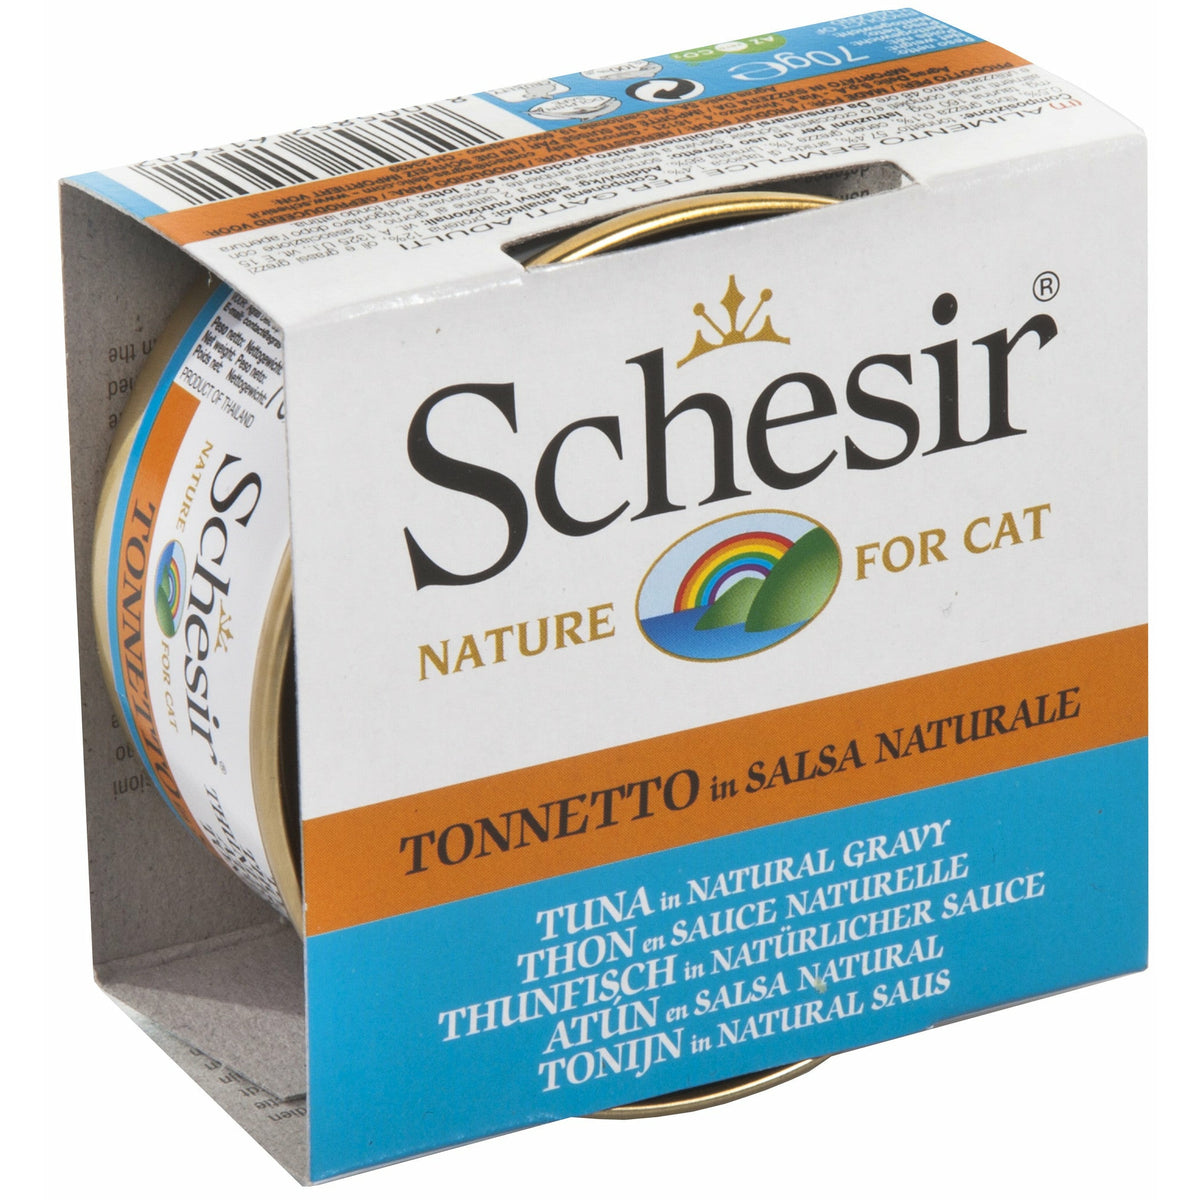 Schesir Tuna in Natural Gravy (70g) - Wet Canned Cat Food